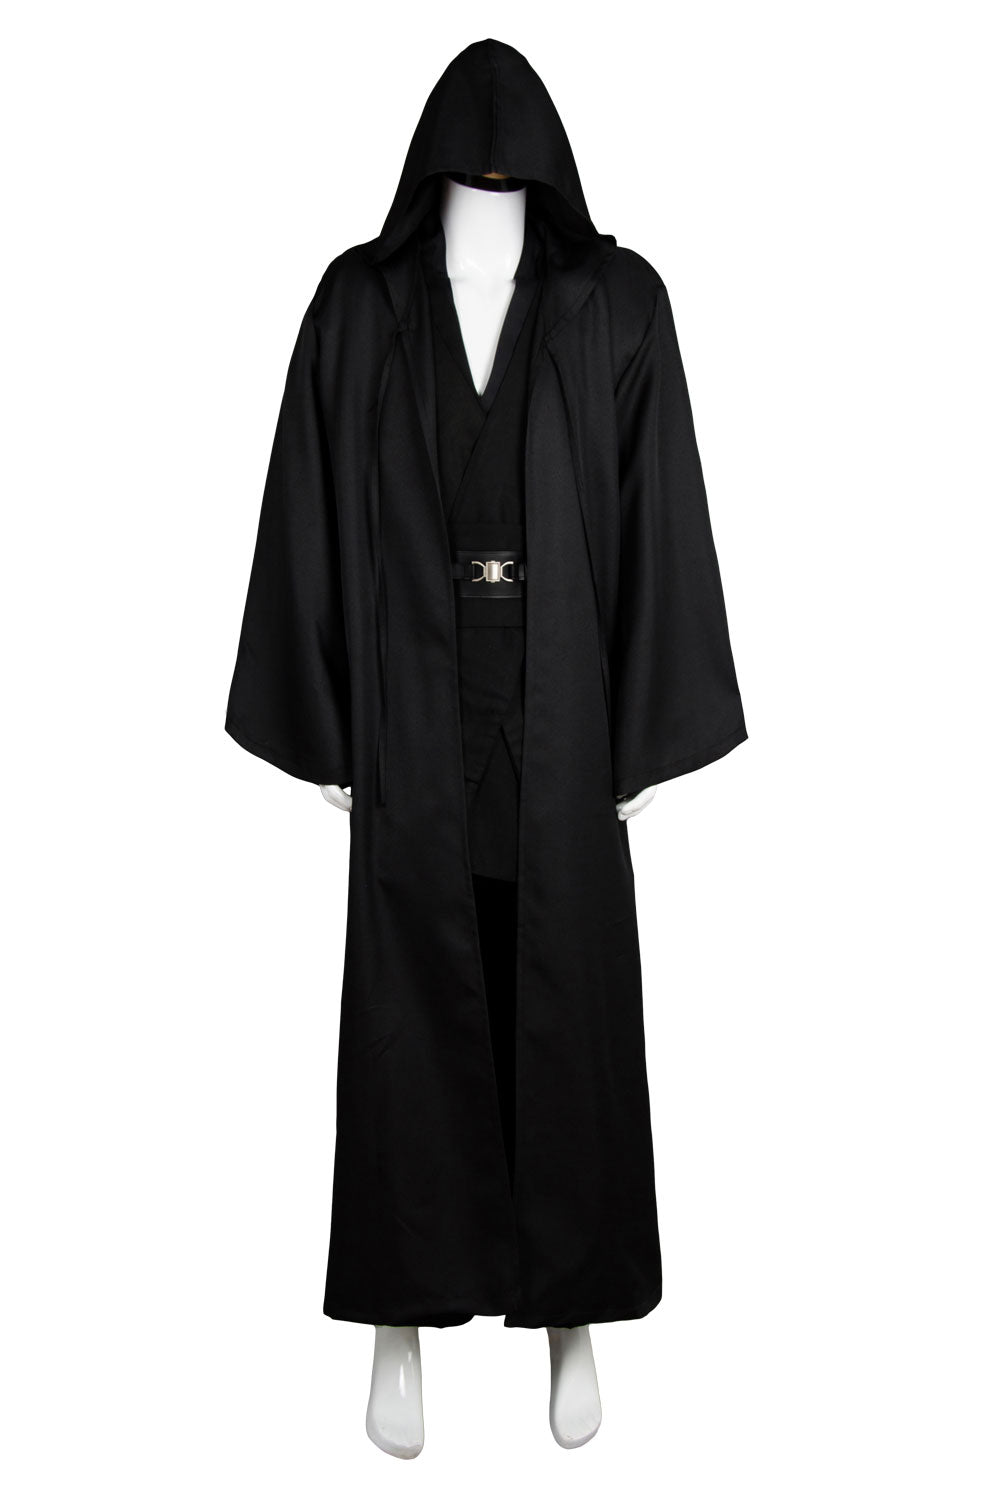 Anakin Skywalker Cosplay Costume Outfit Black Version